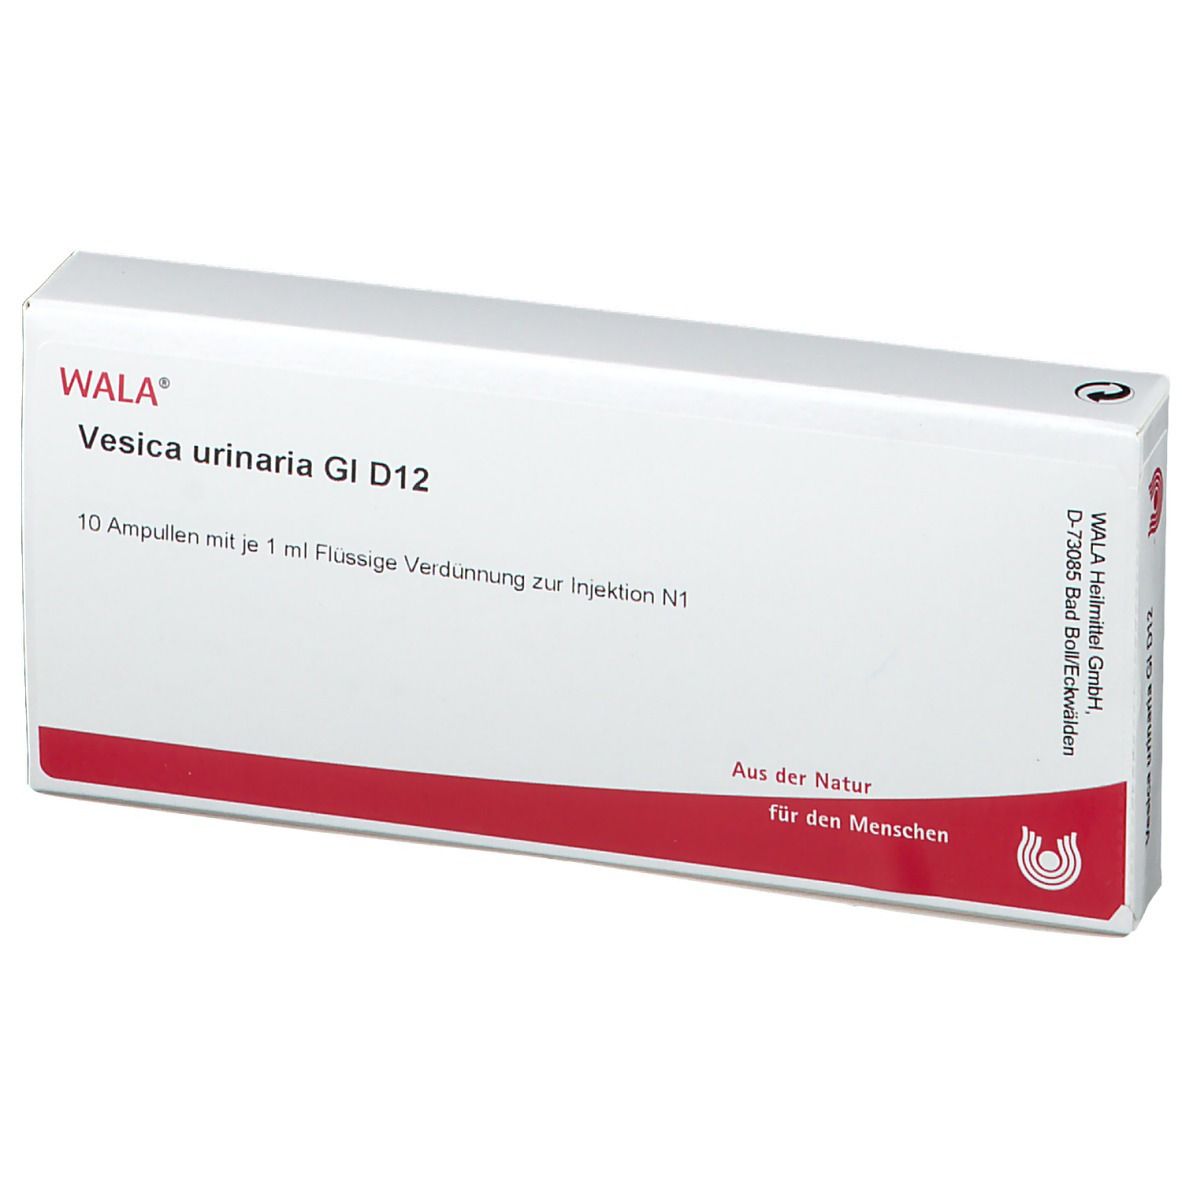 WALA® Vesica urinaria Gl D 12